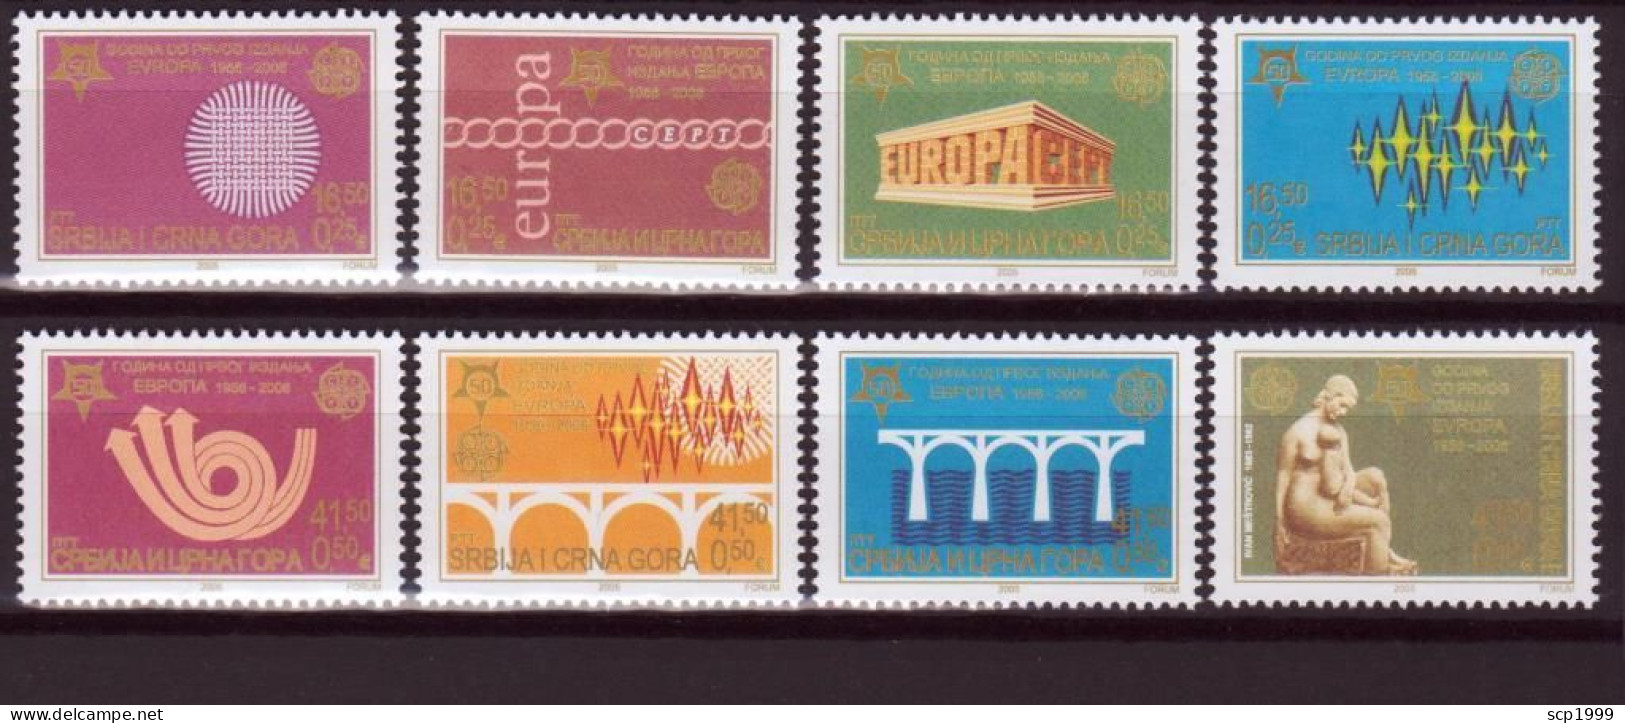 Serbia 2006 - Europa 50 Years Stamps Set MNH - Serbien